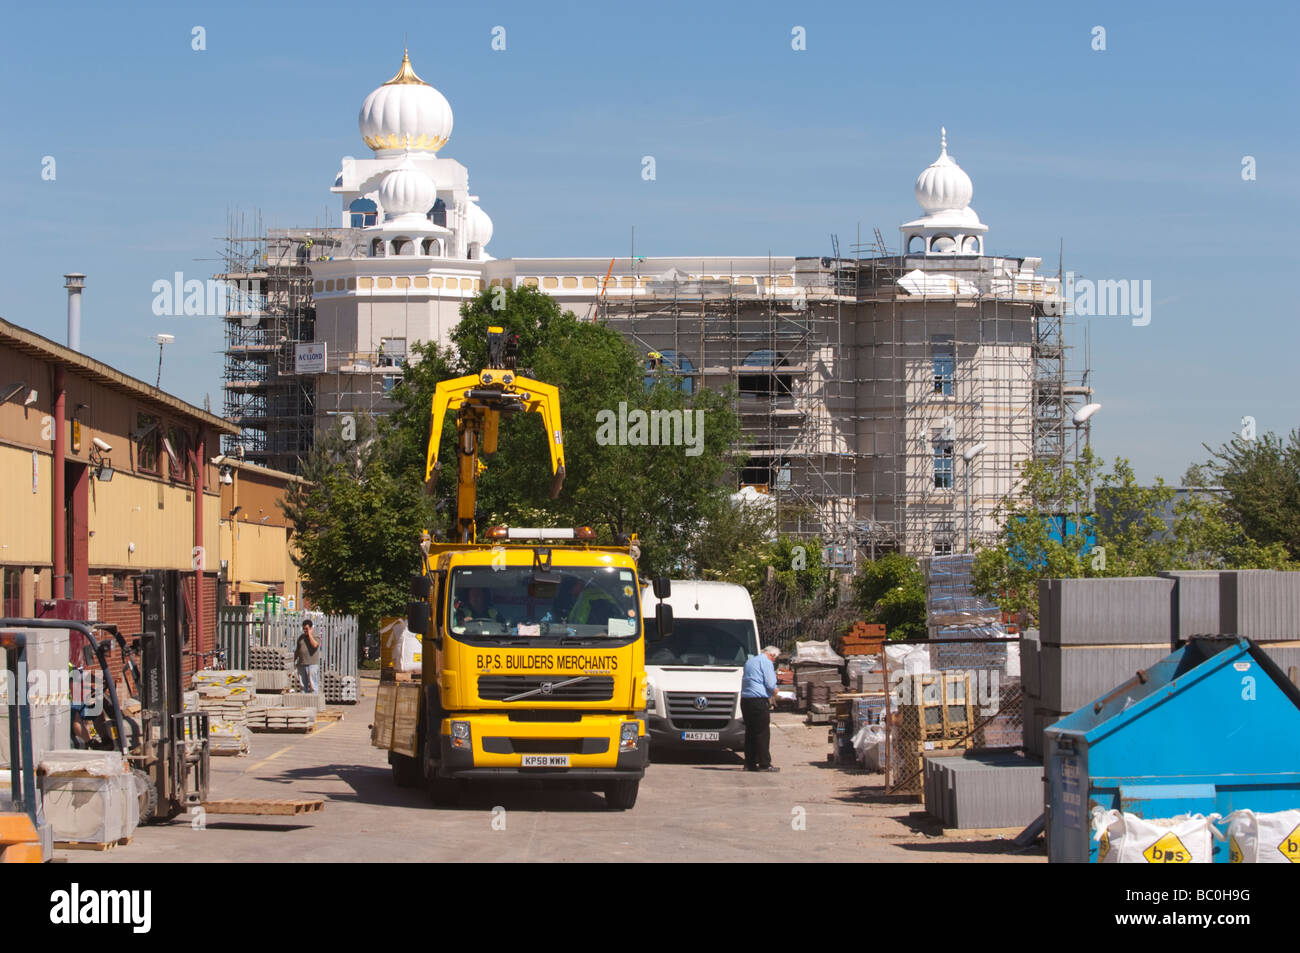 Builders merchants with Gurdwara Sikh Temple construction site behind, Leamington Spa, Warwickshire, UK. Stock Photo